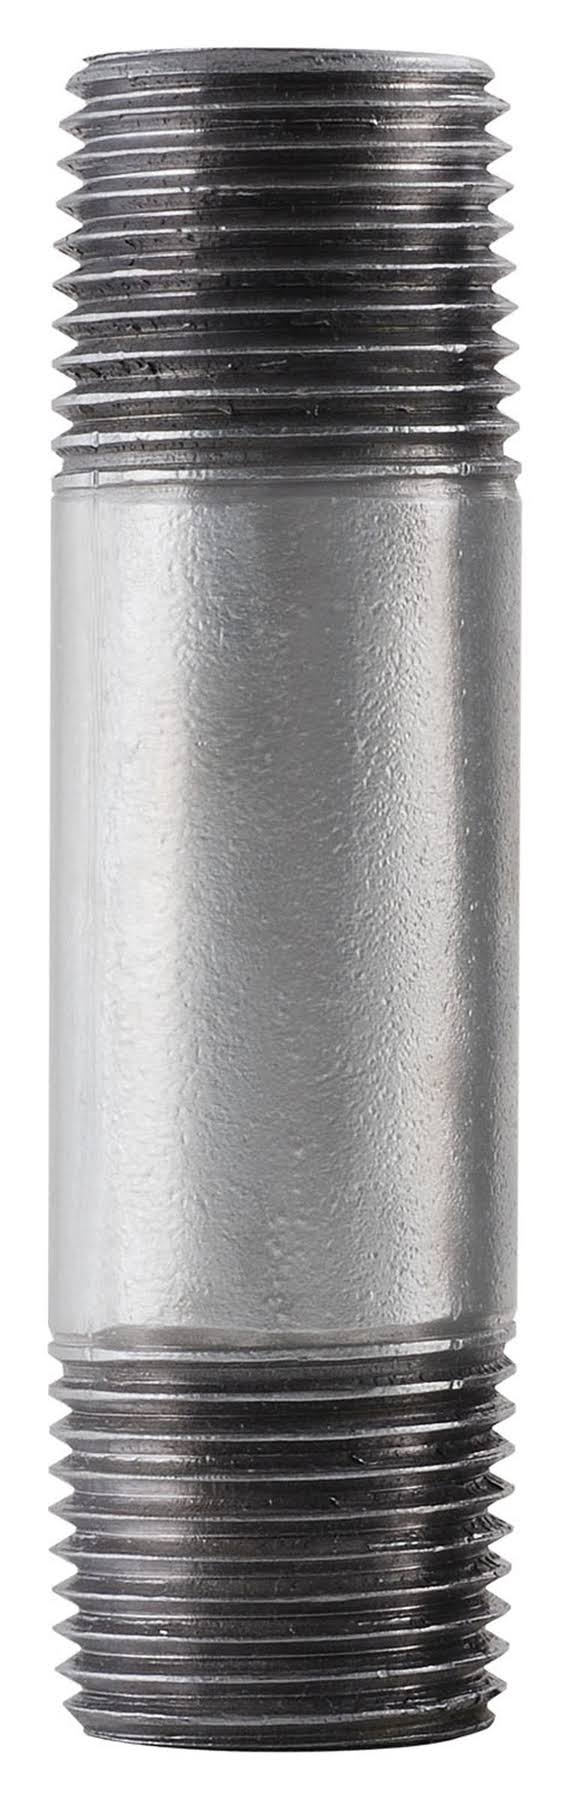 Ldr Galvanized Steel Nipple - 1/4"x4.5"